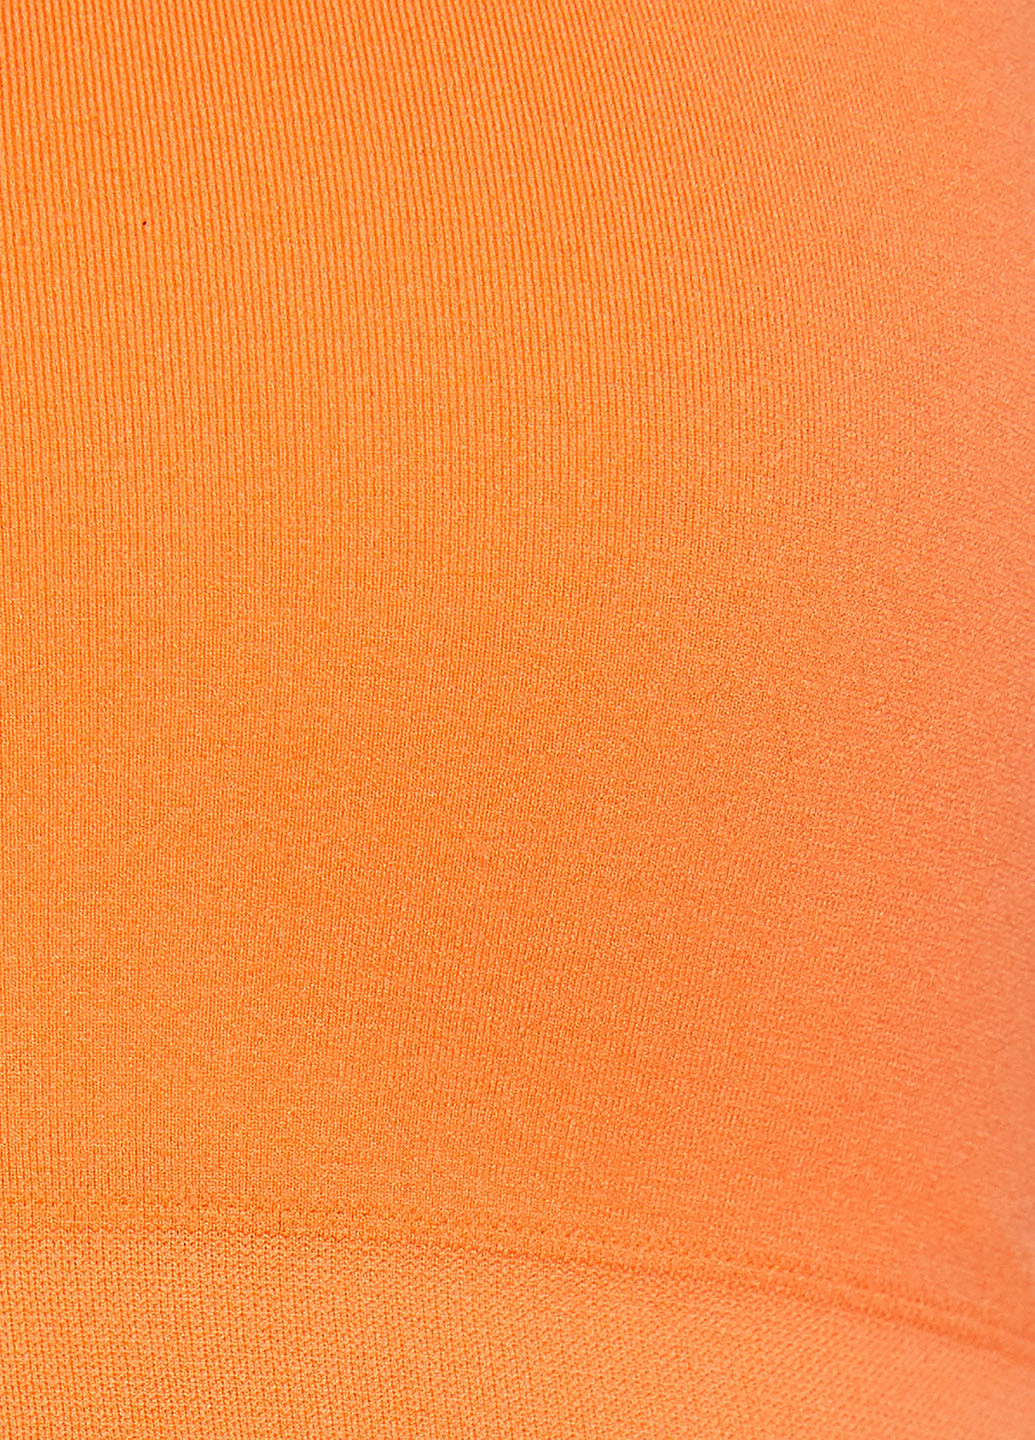 Топ KOTON однотонный оранжевый спортивный полиамид, трикотаж